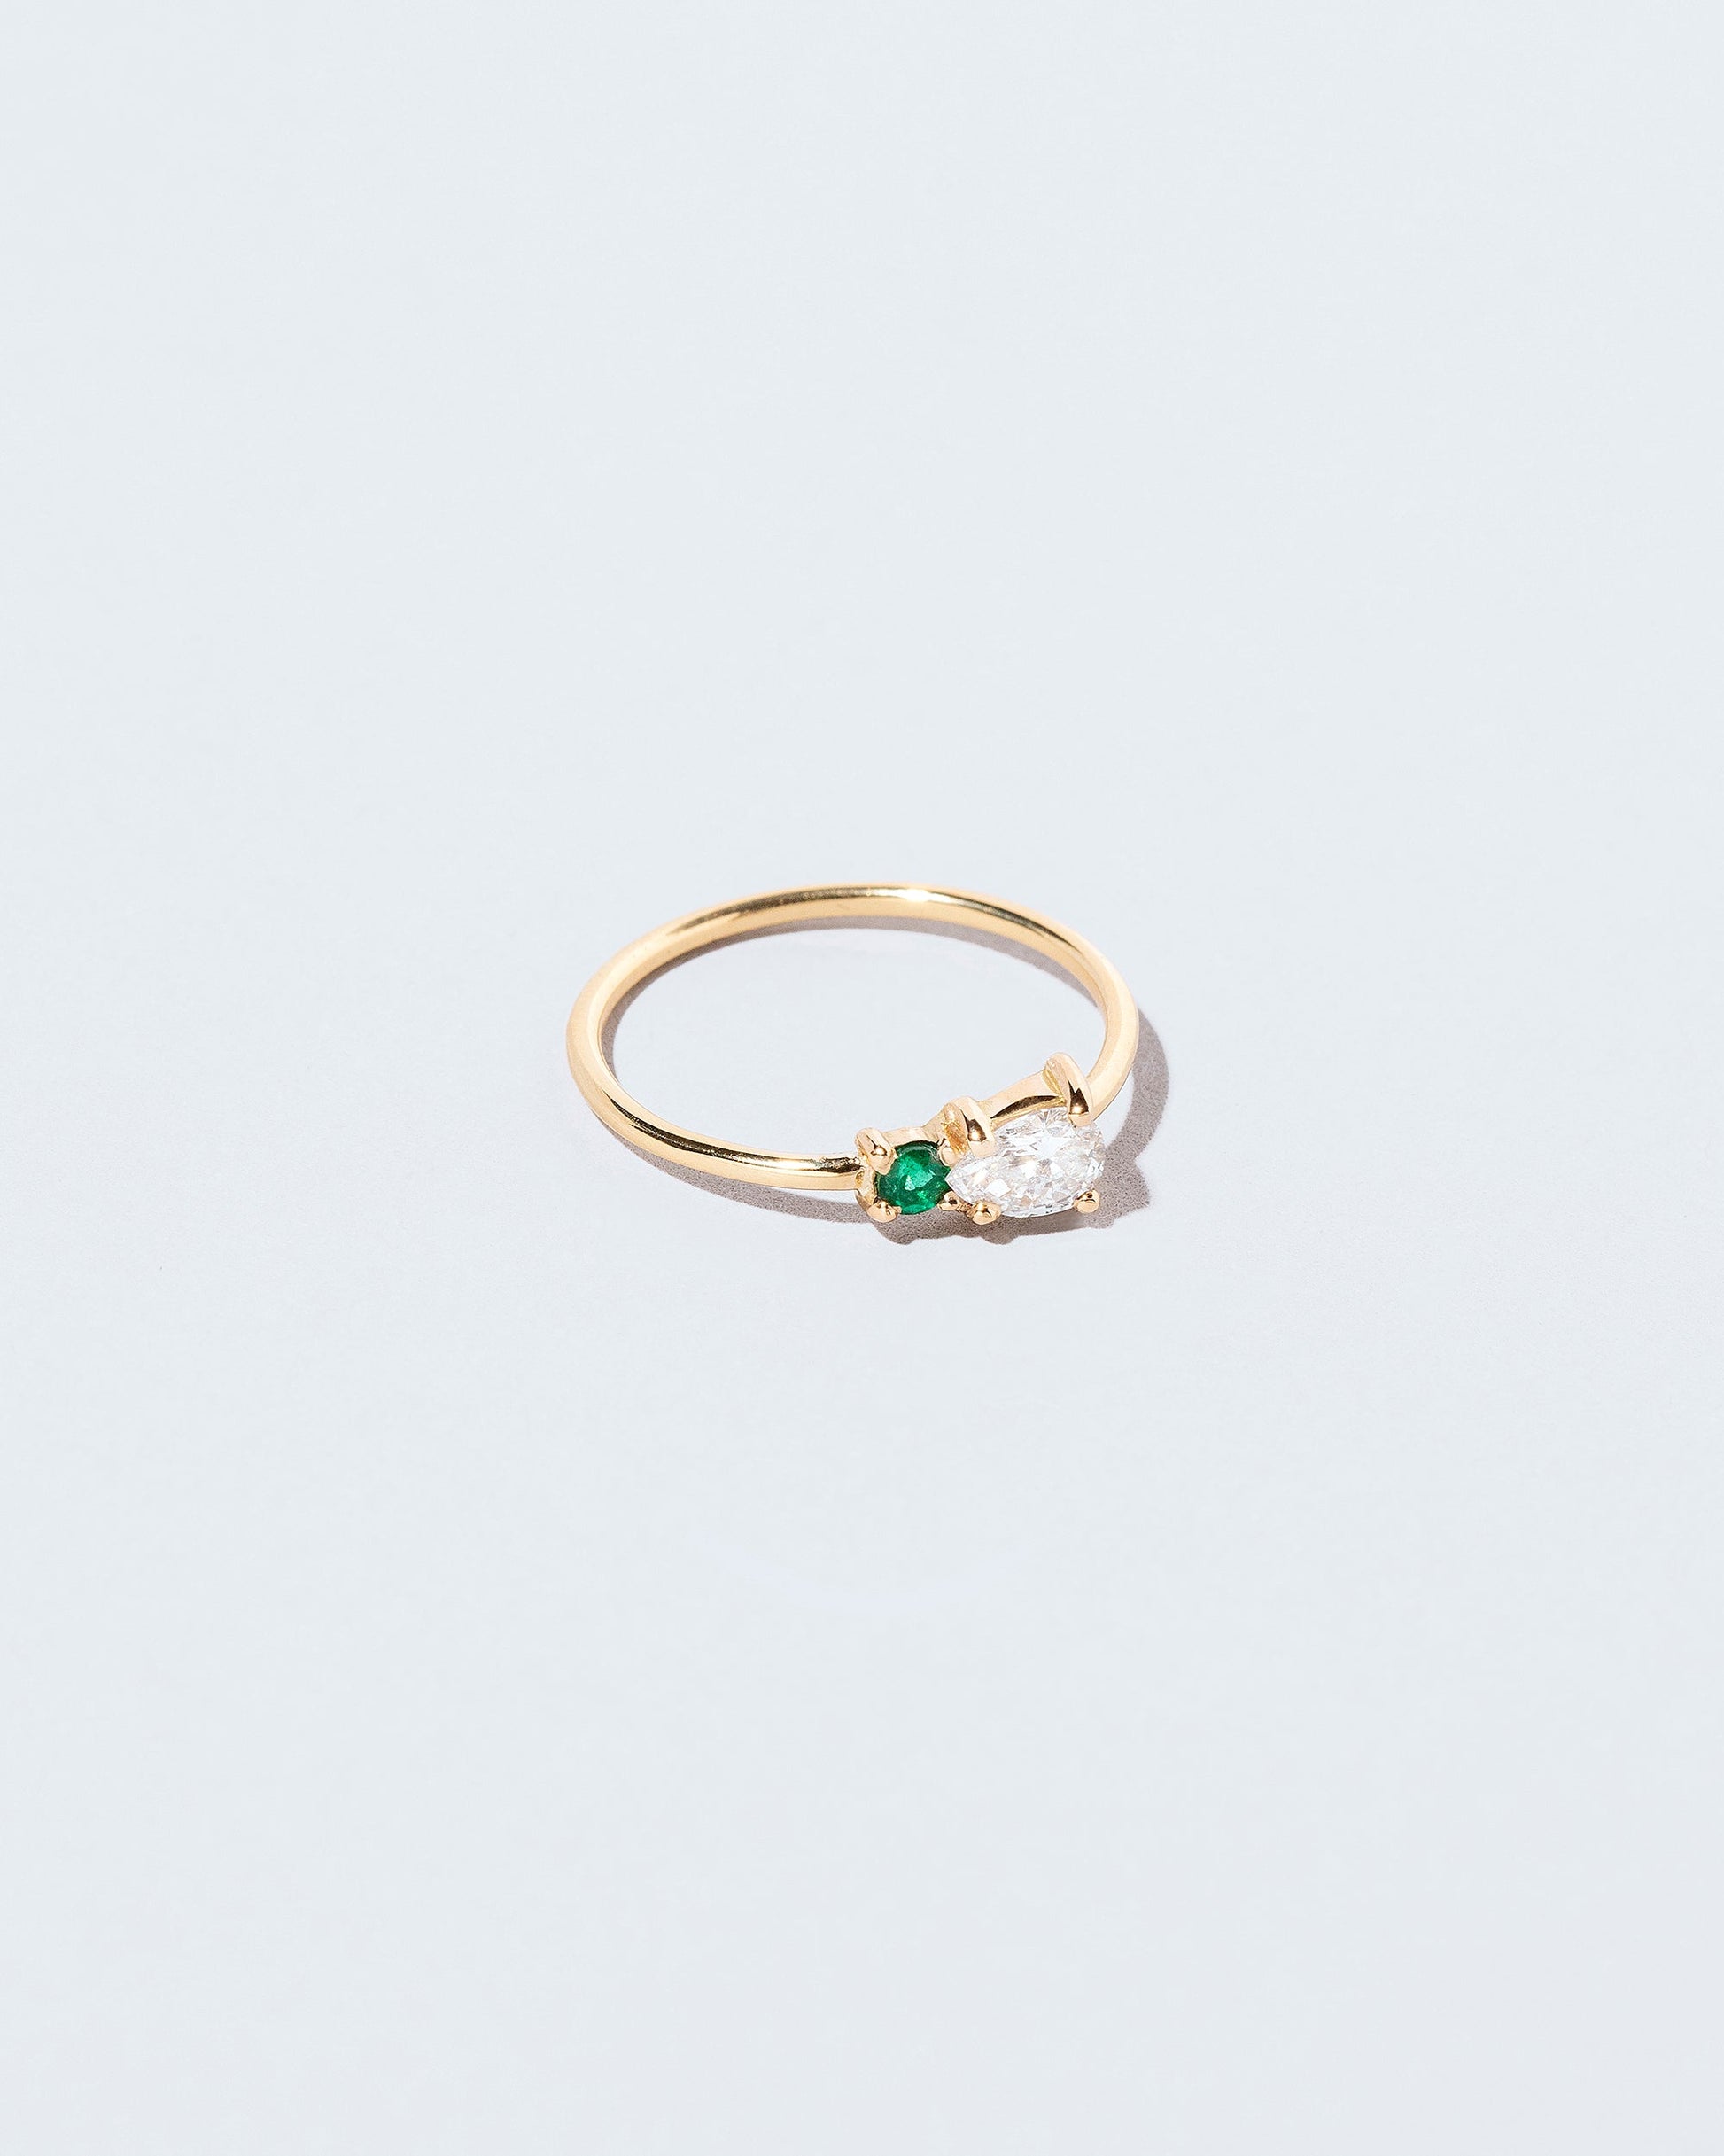  Teardrop Ring - Diamond & Emerald on light color background.